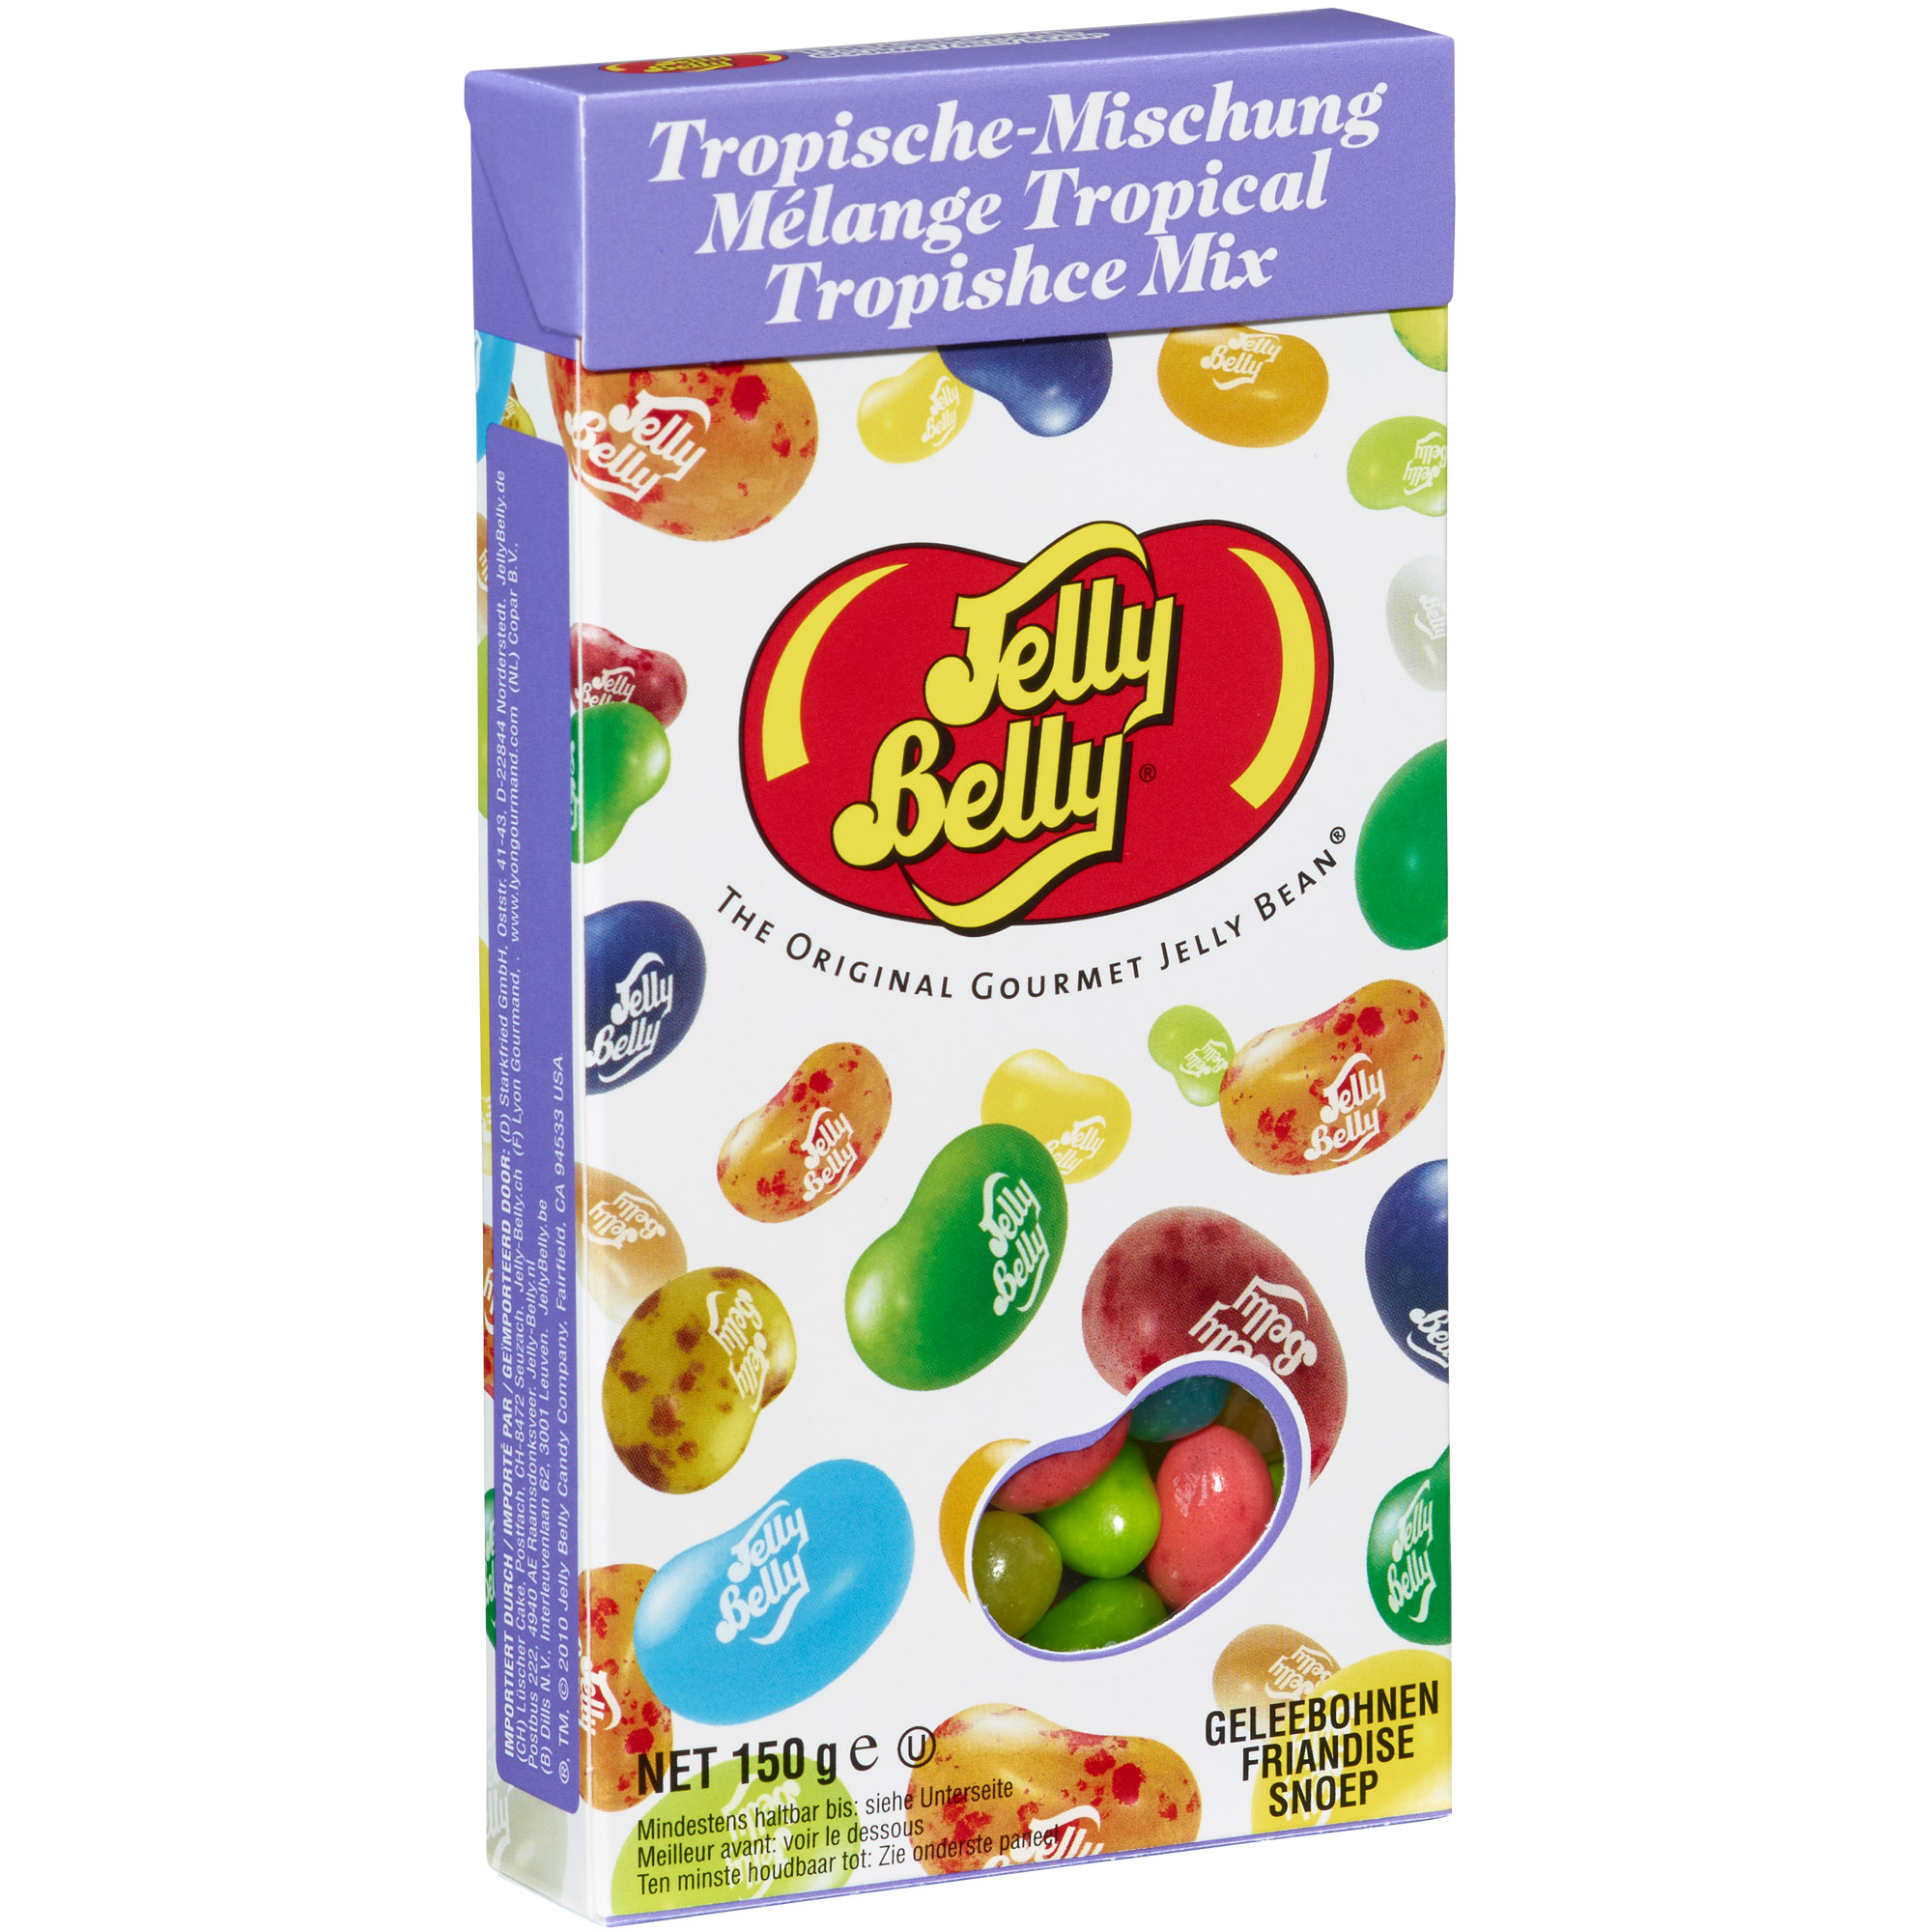 jelly belly tropische mischung flip-top-box 150g